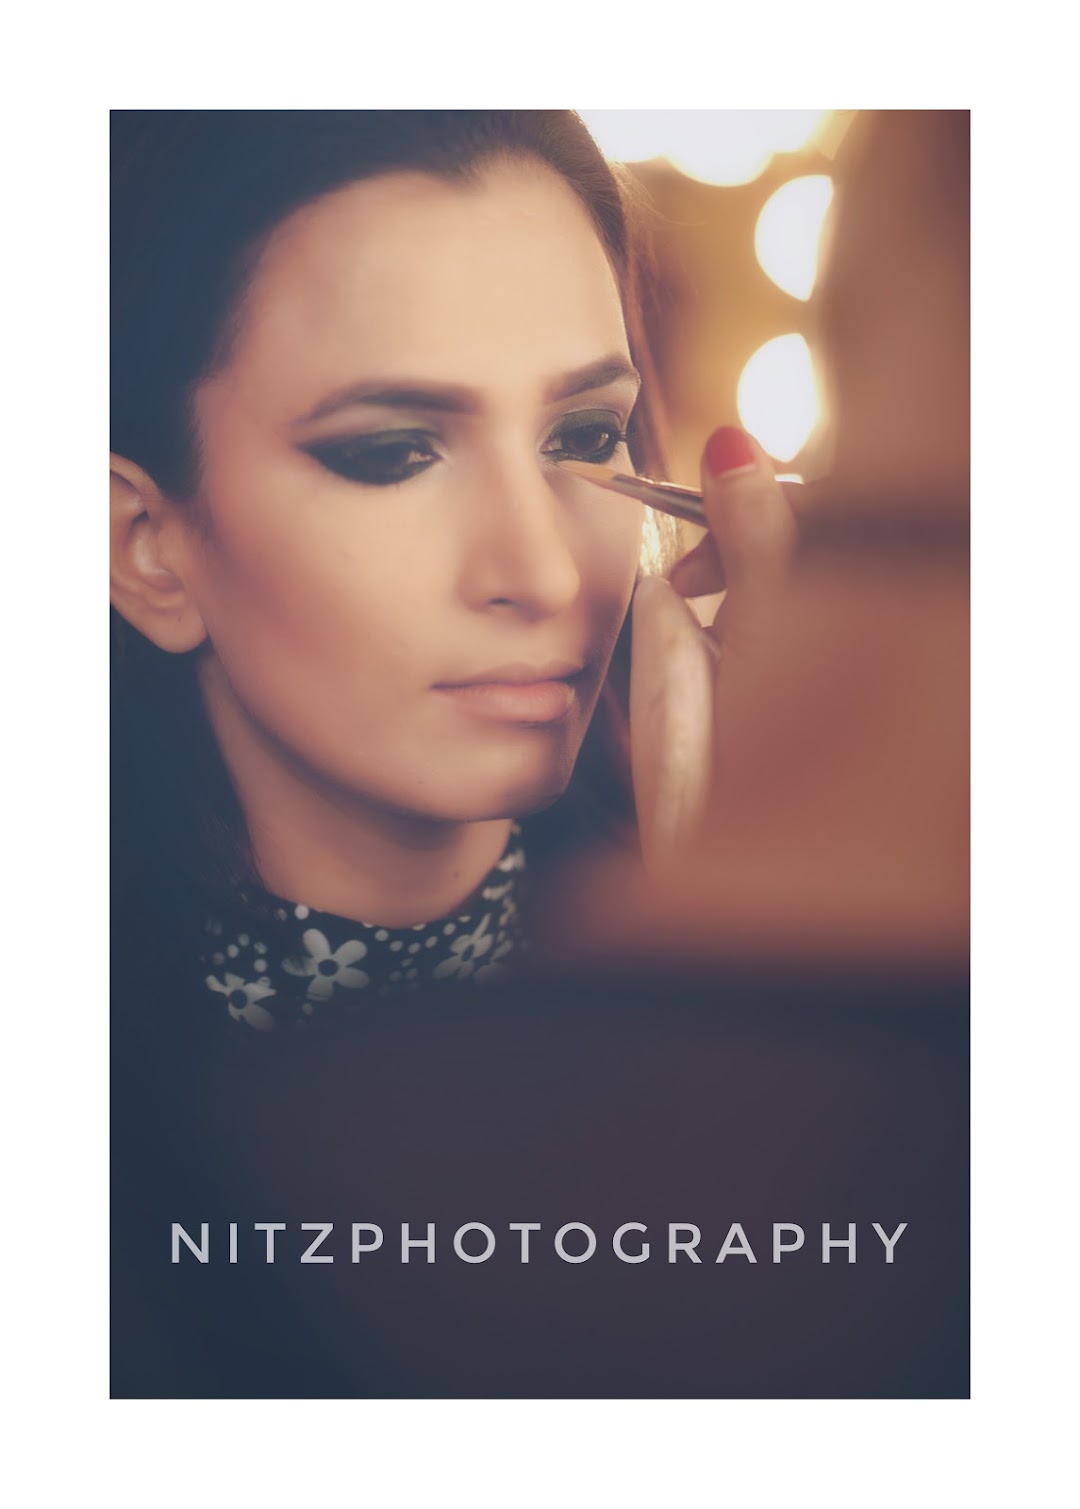 NitZphotography